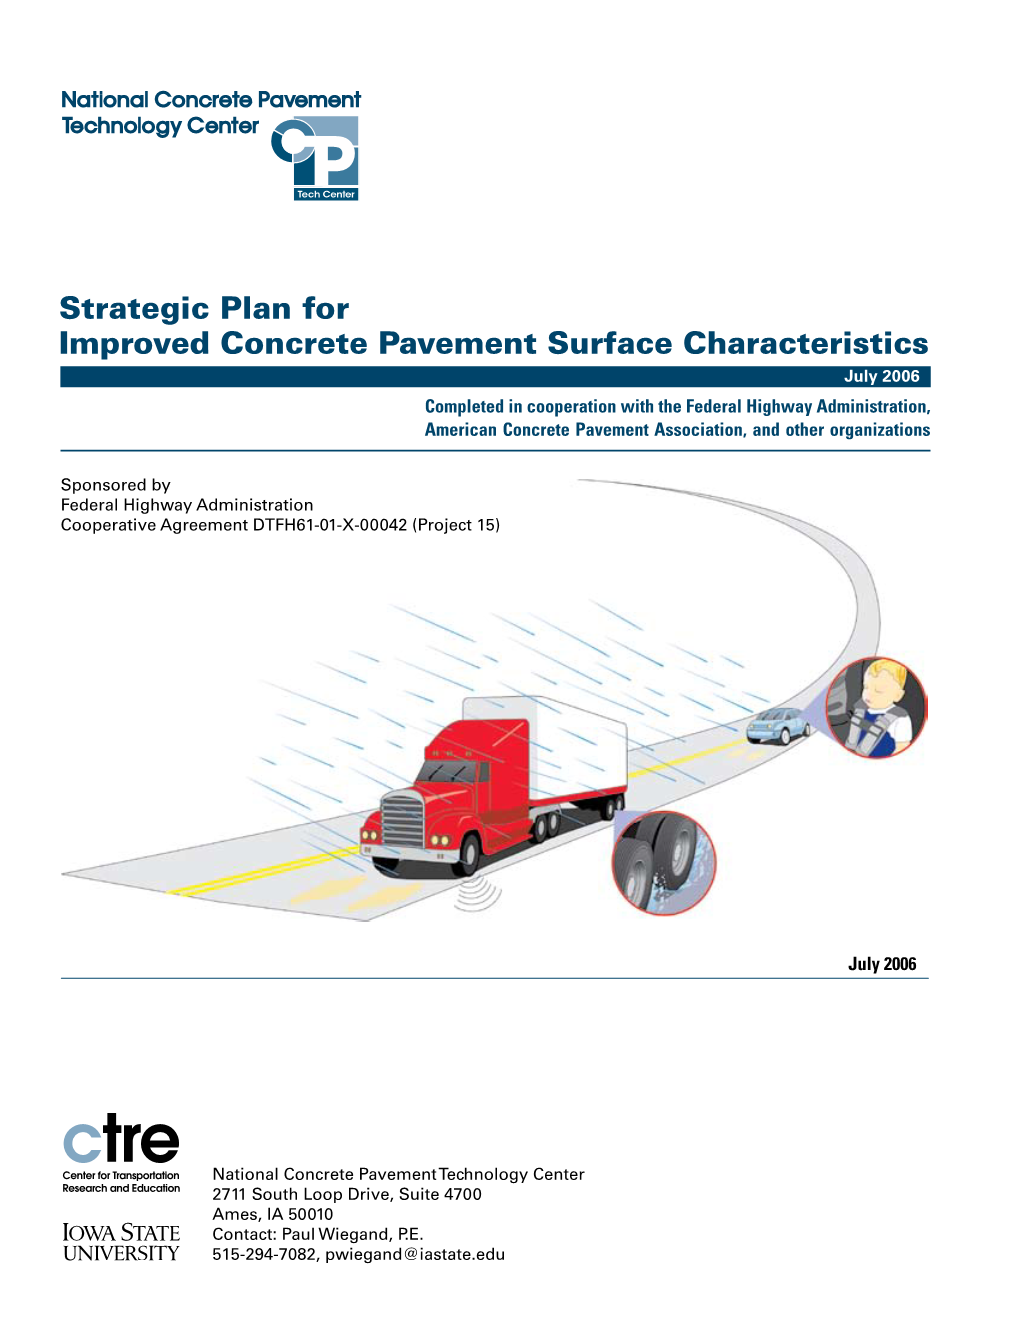 Strategic Plan for Improved Concrete Pavement Surface Characteristics